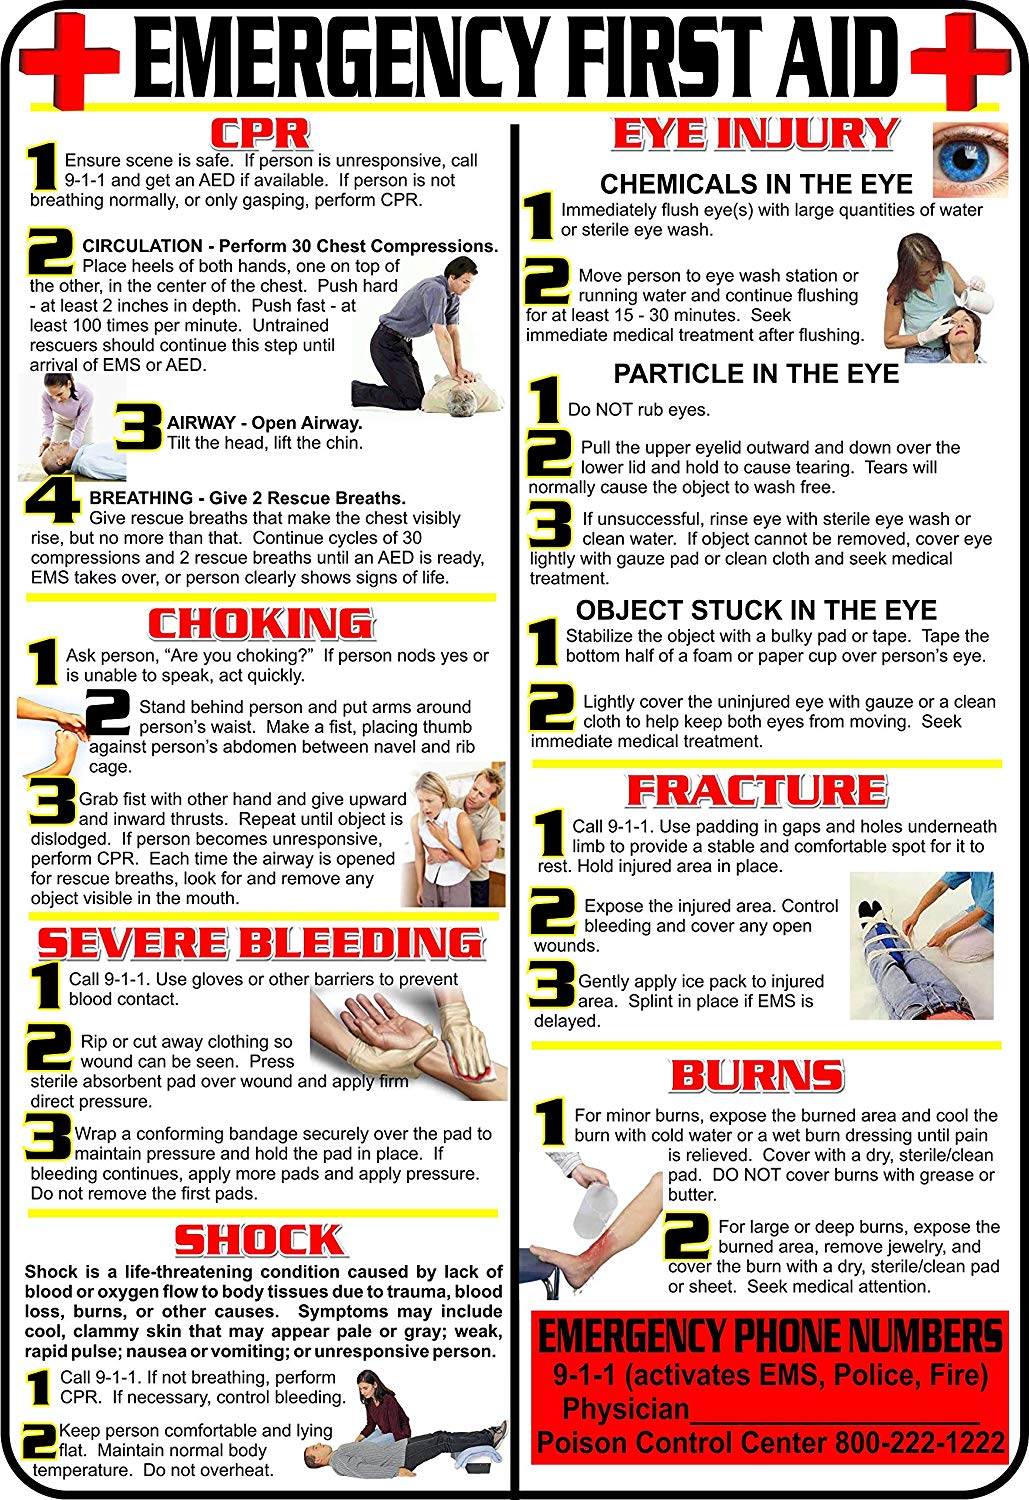 Emergency First Aid Poster, Aydelott Equipment, Inc.